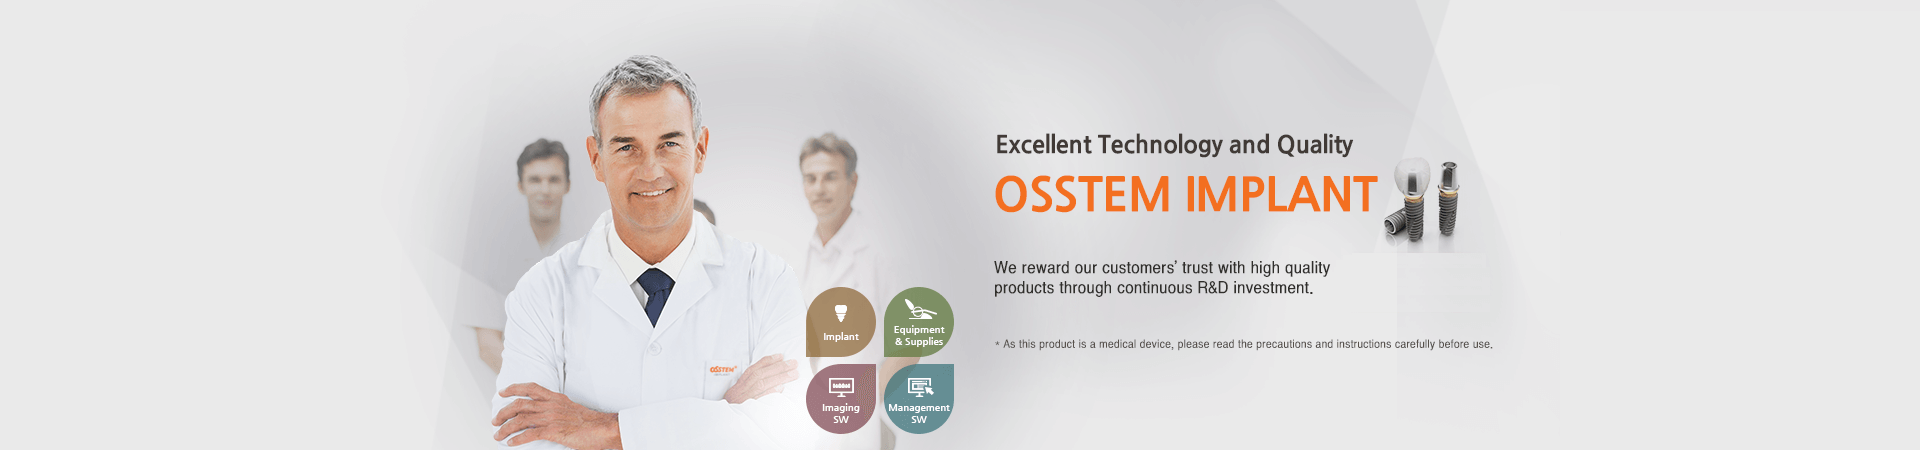 Osstem Implant-  Excellent Quality Assurance